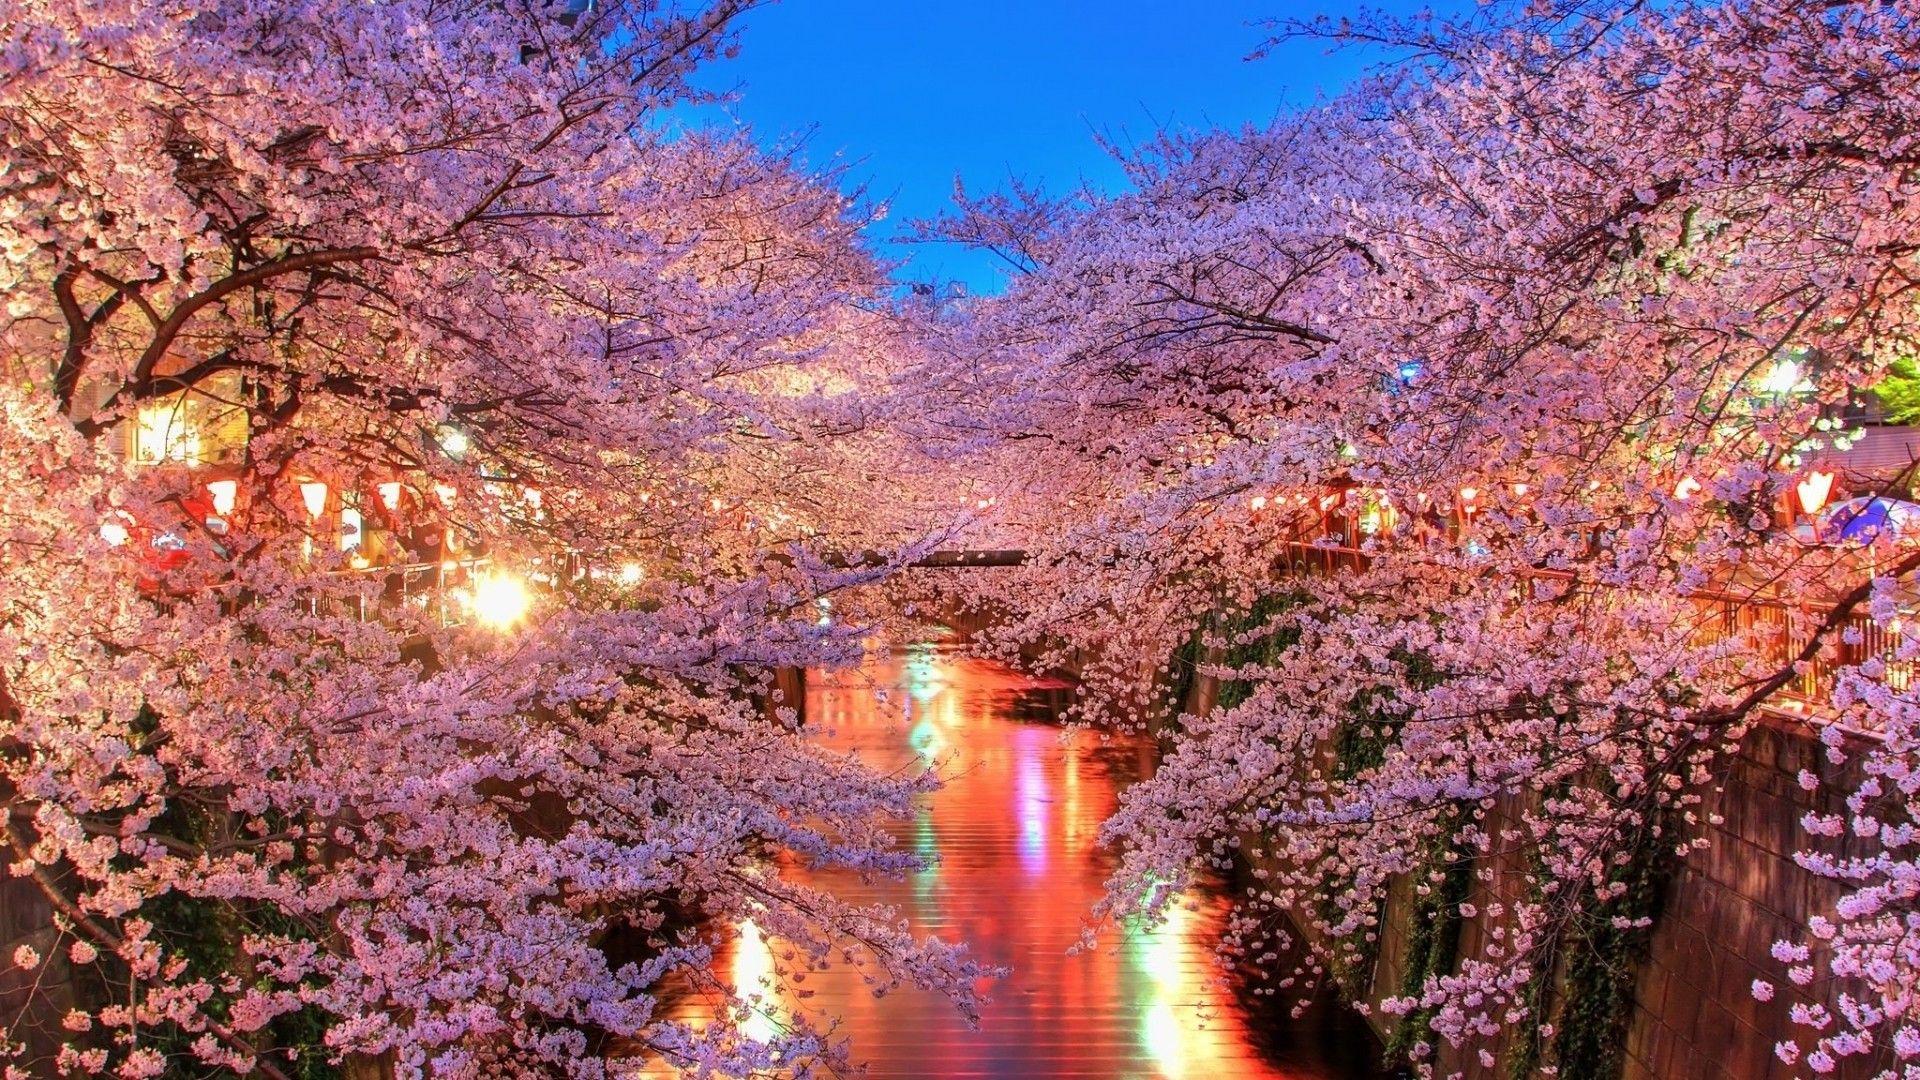 Sakura oriental evening. Photography. Cherry blossom